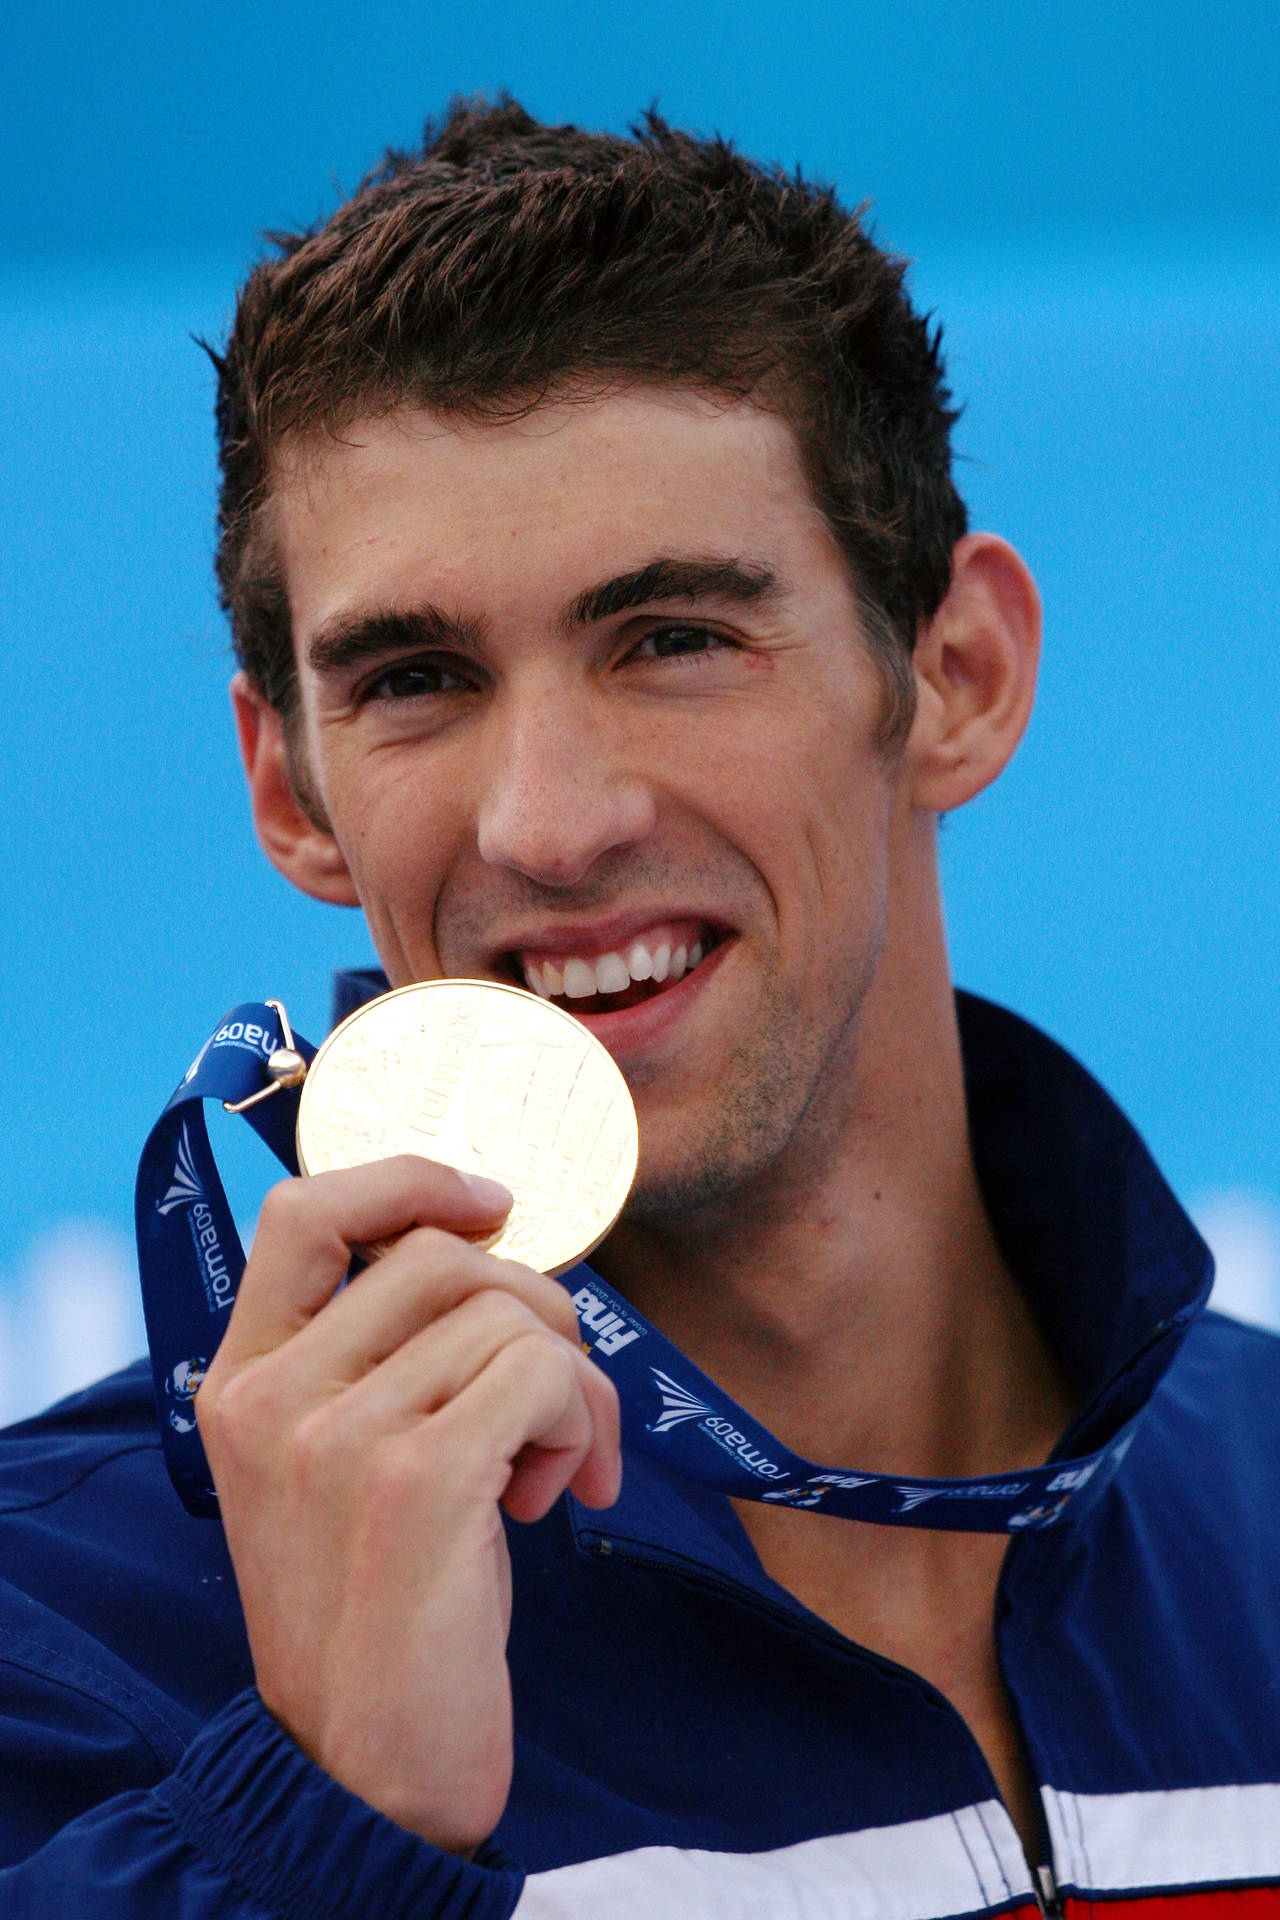 Michael Phelps Award Background